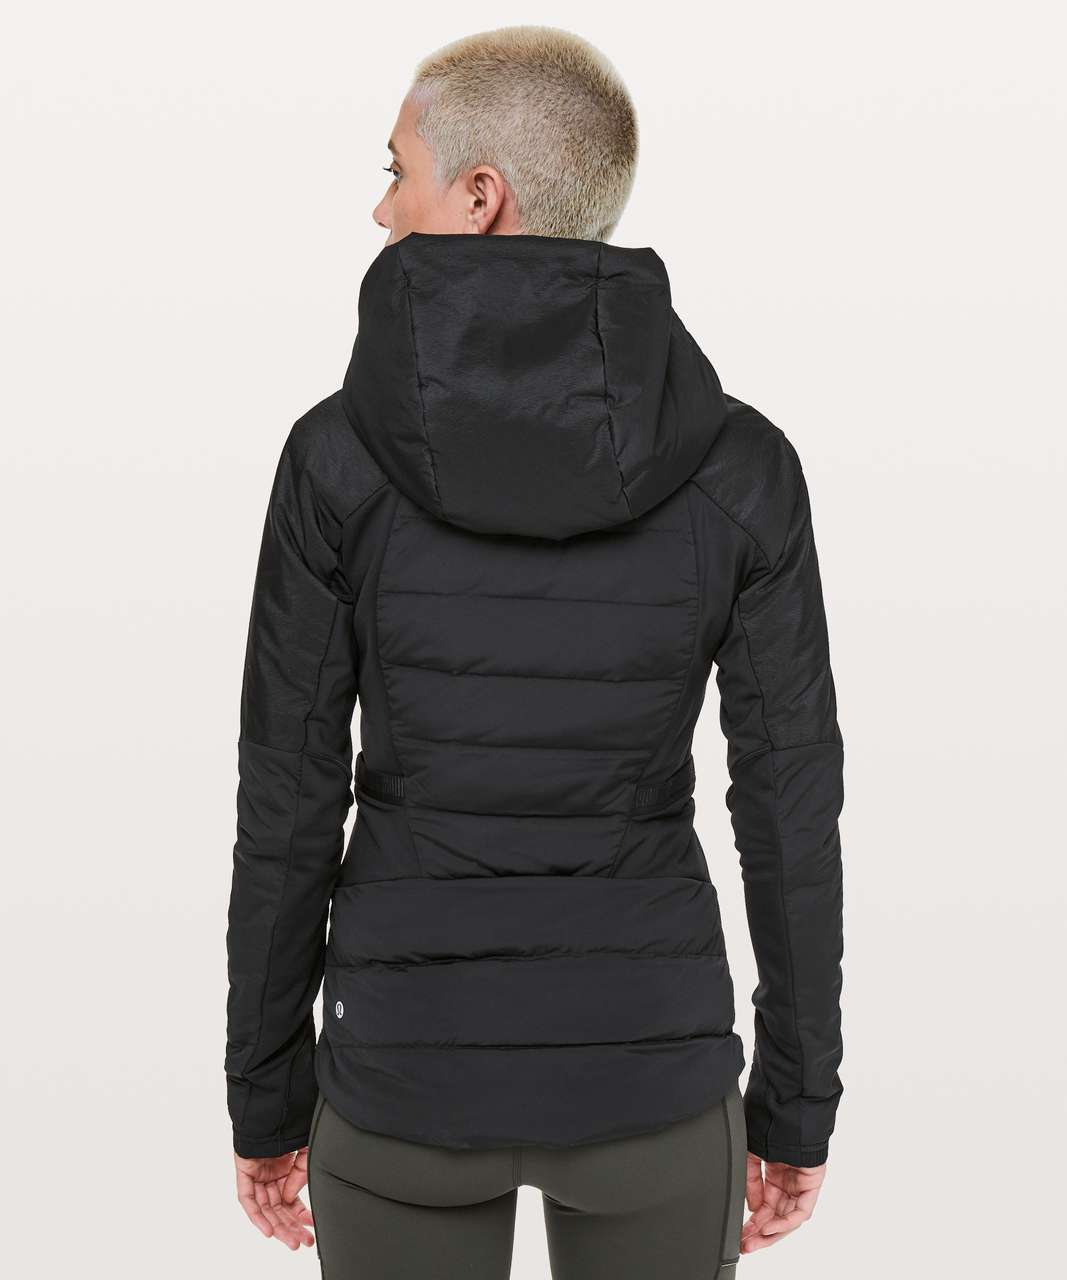 LULULEMON WOMEN'S DOWN For It All Jacket Black UK Size 10, US size